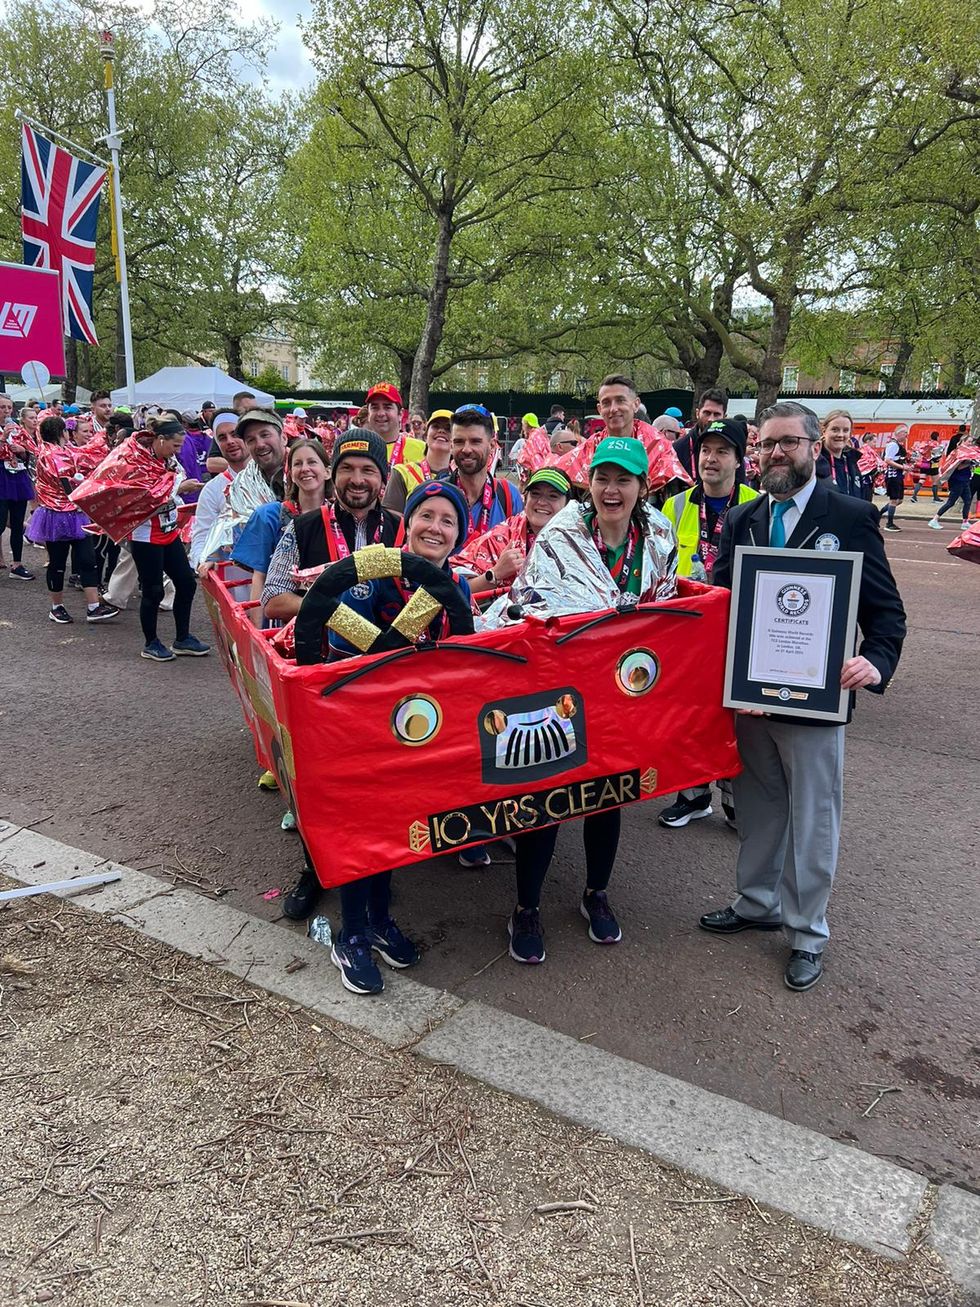 Breast cancer survivor says running London Marathon ‘made me feel alive’